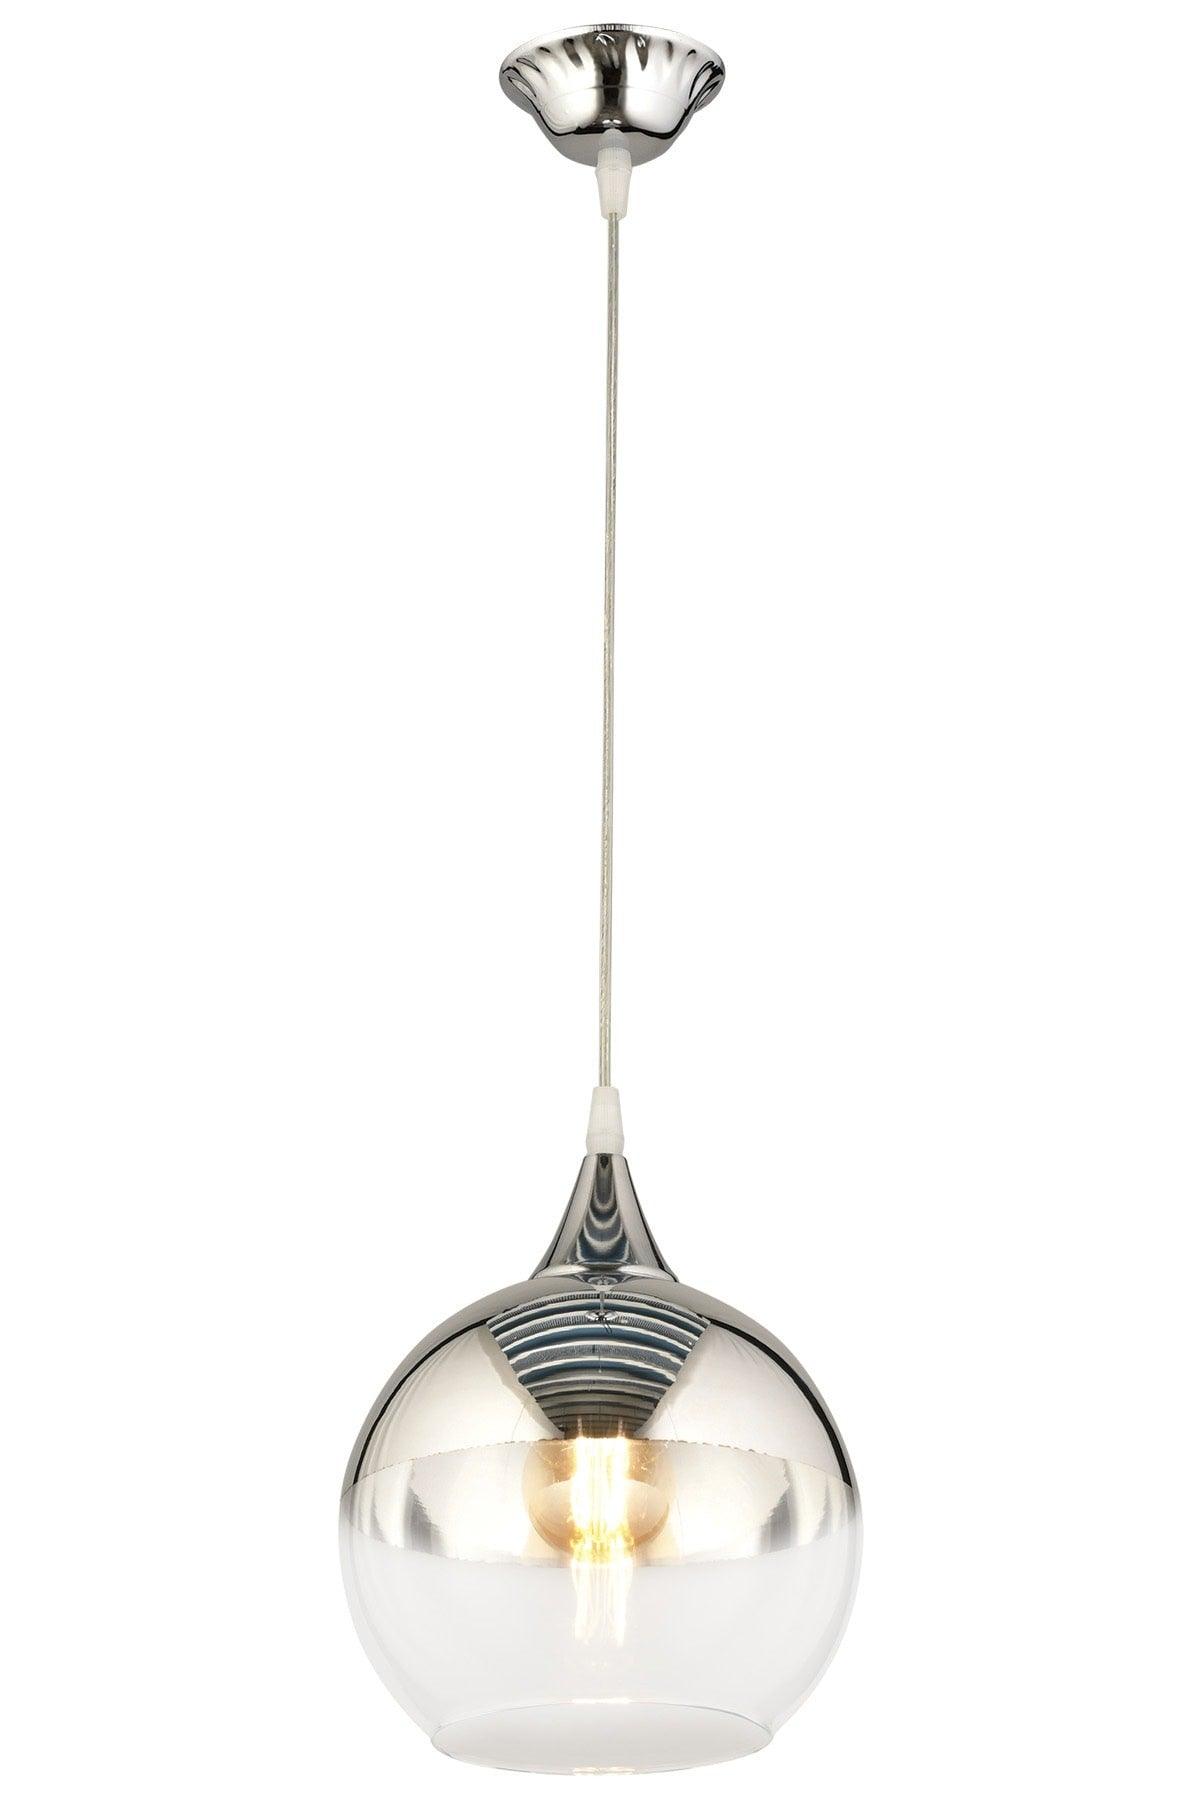 Anet Silver Glass Pendant Lamp Single Chandelier - Swordslife